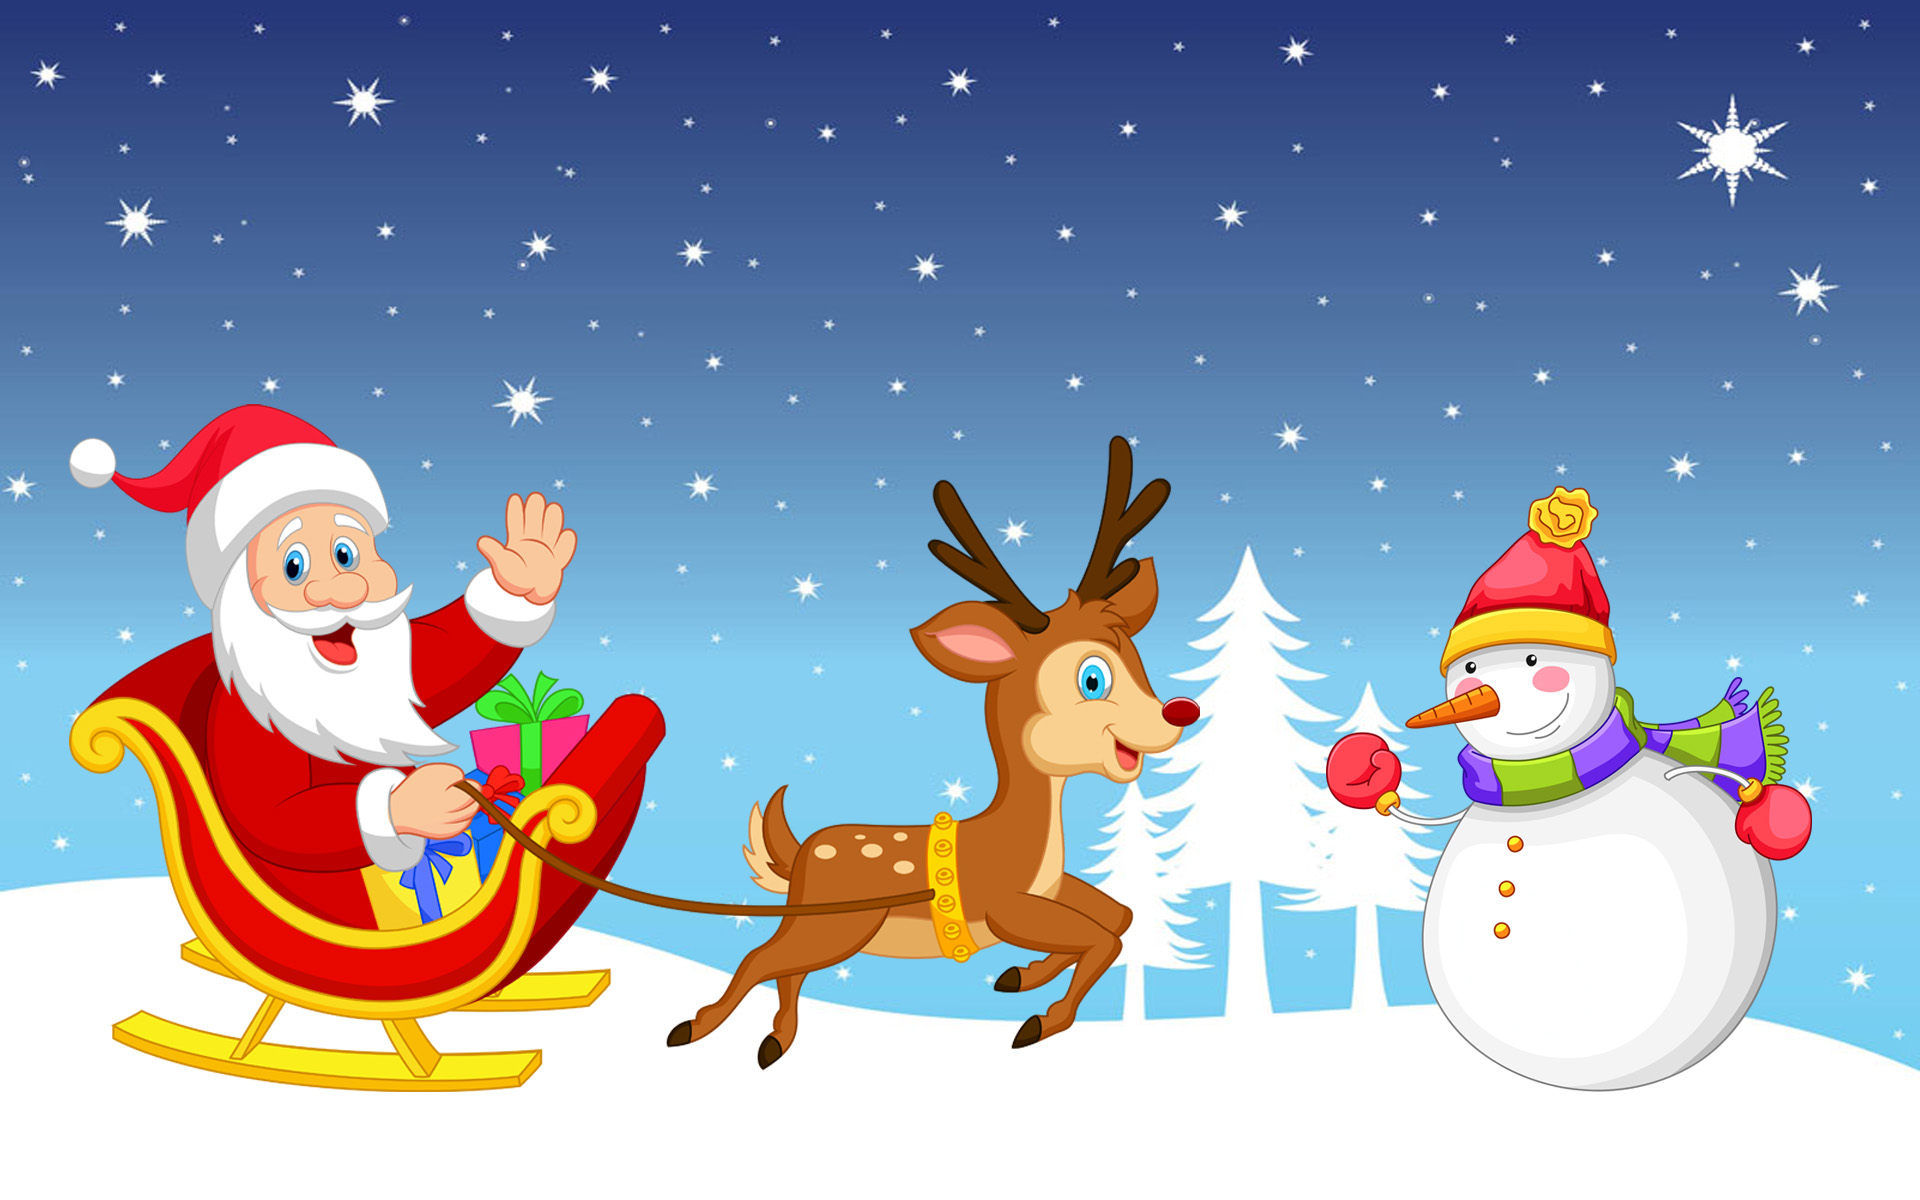 New year's song. Олени Деда Мороза. Олень Санта-Клауса. Новогодний олень и Снеговик. Сказочные олени Деда Мороза.